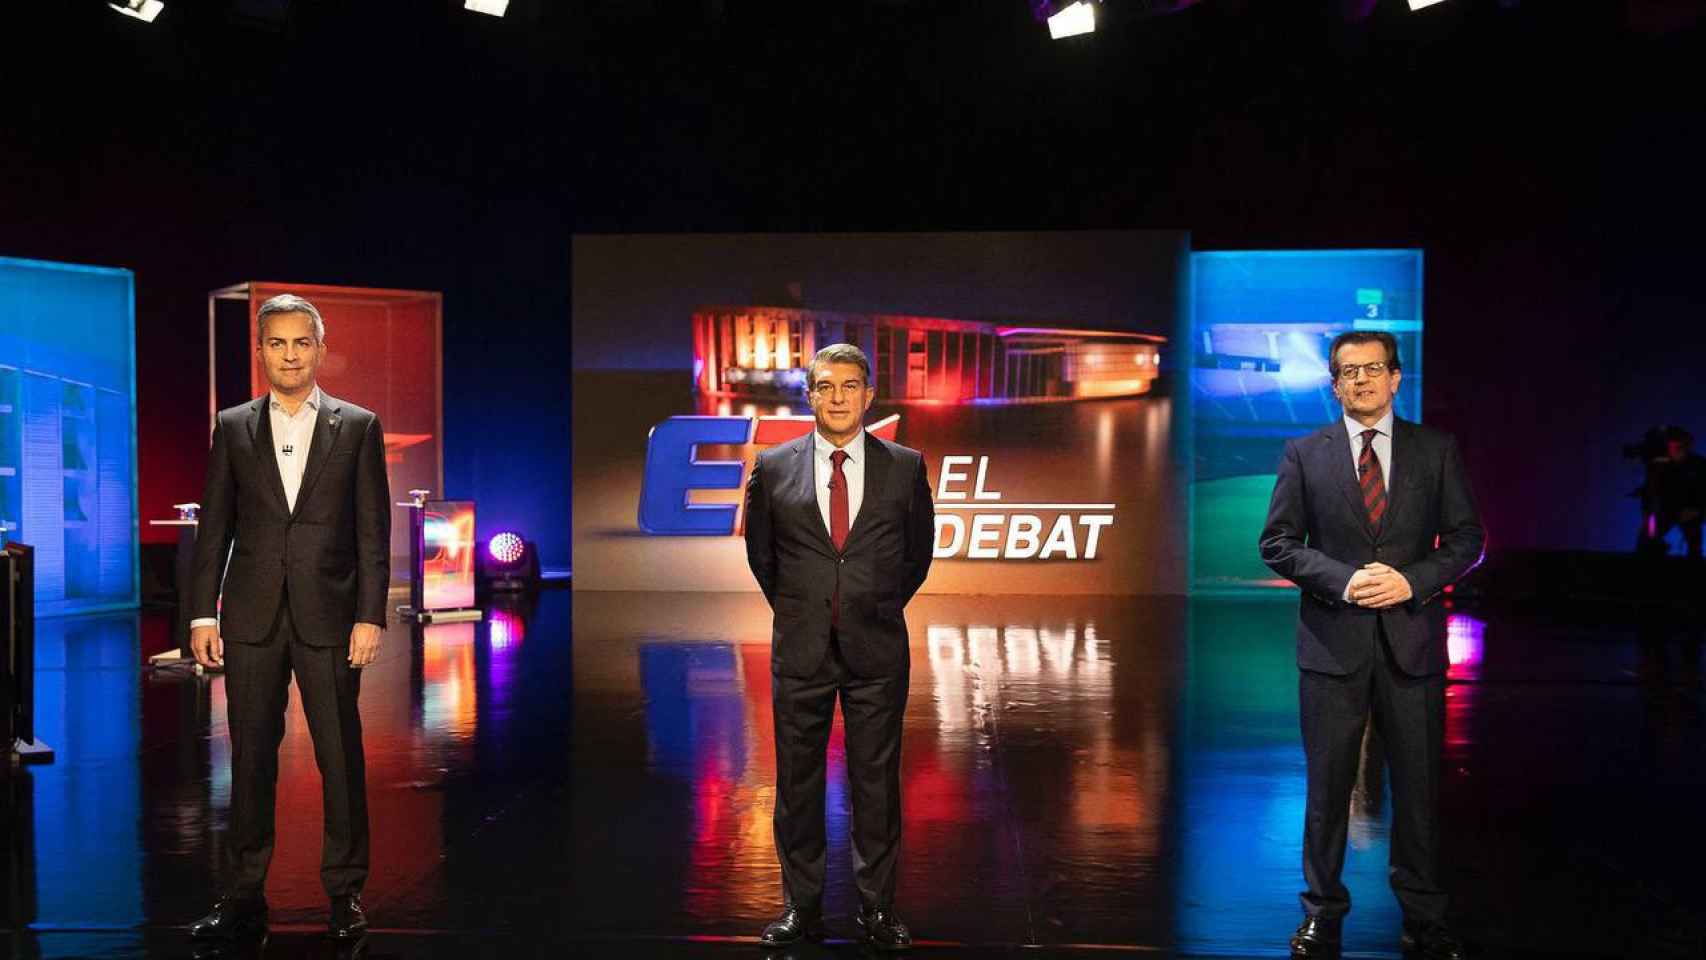 Font, Laporta y Freixa, en el debate de TV3 | CCMA